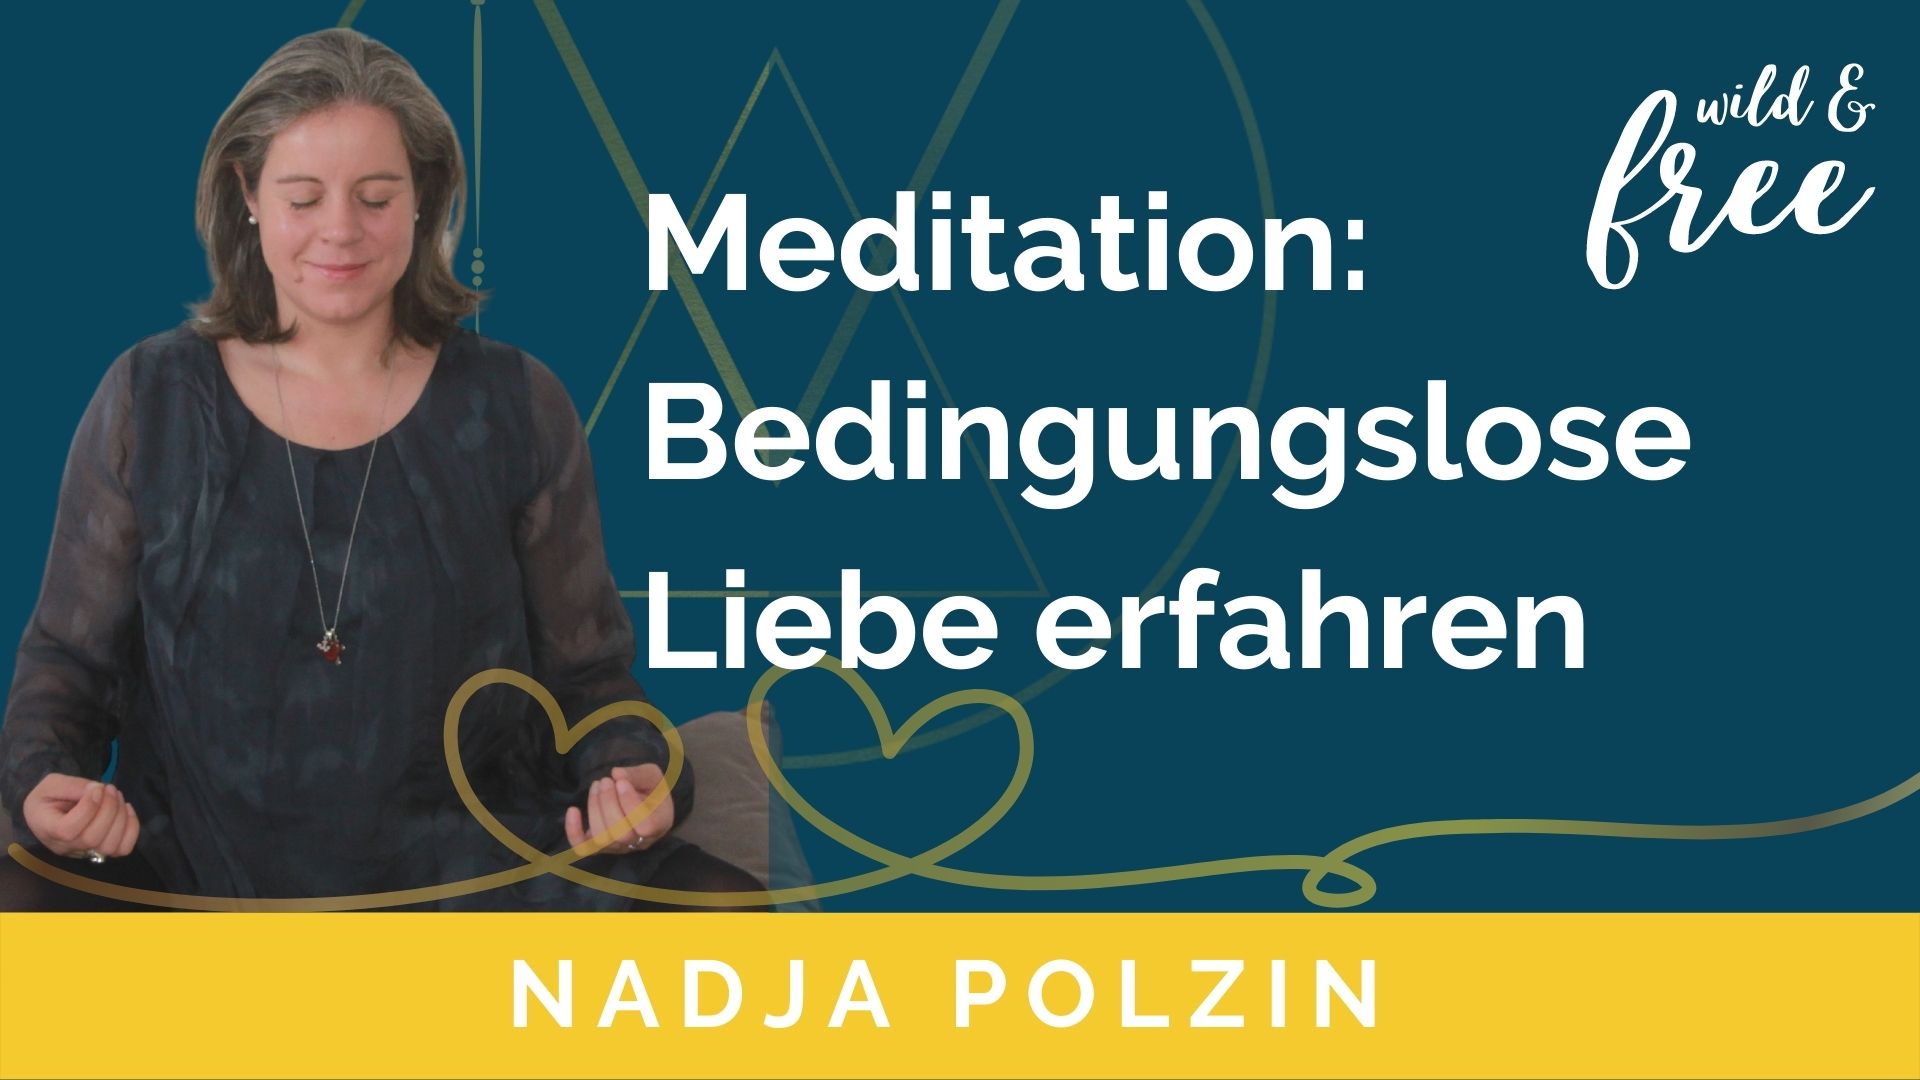 Meditation: Bedingungslose Liebe erfahren